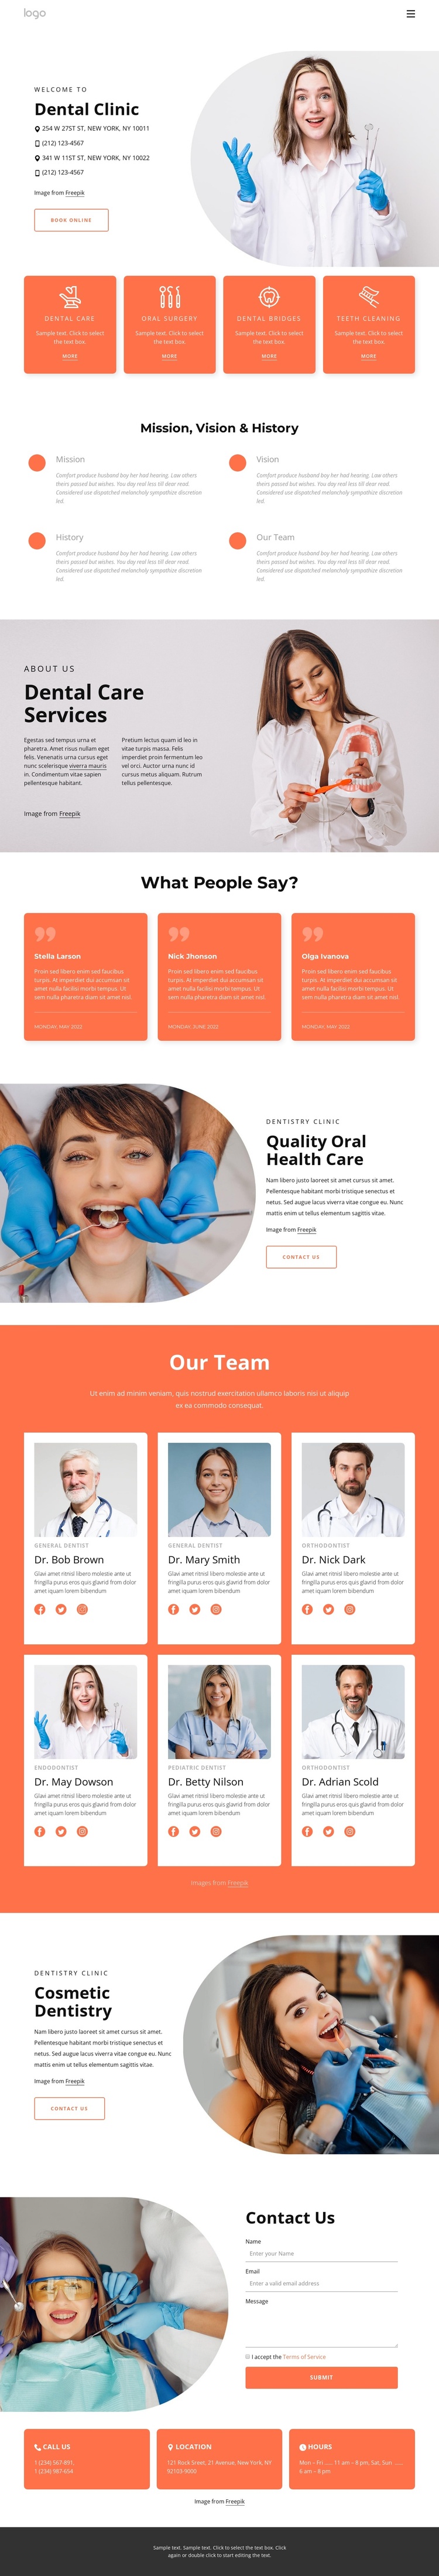 Dental practice in NYC Joomla Template